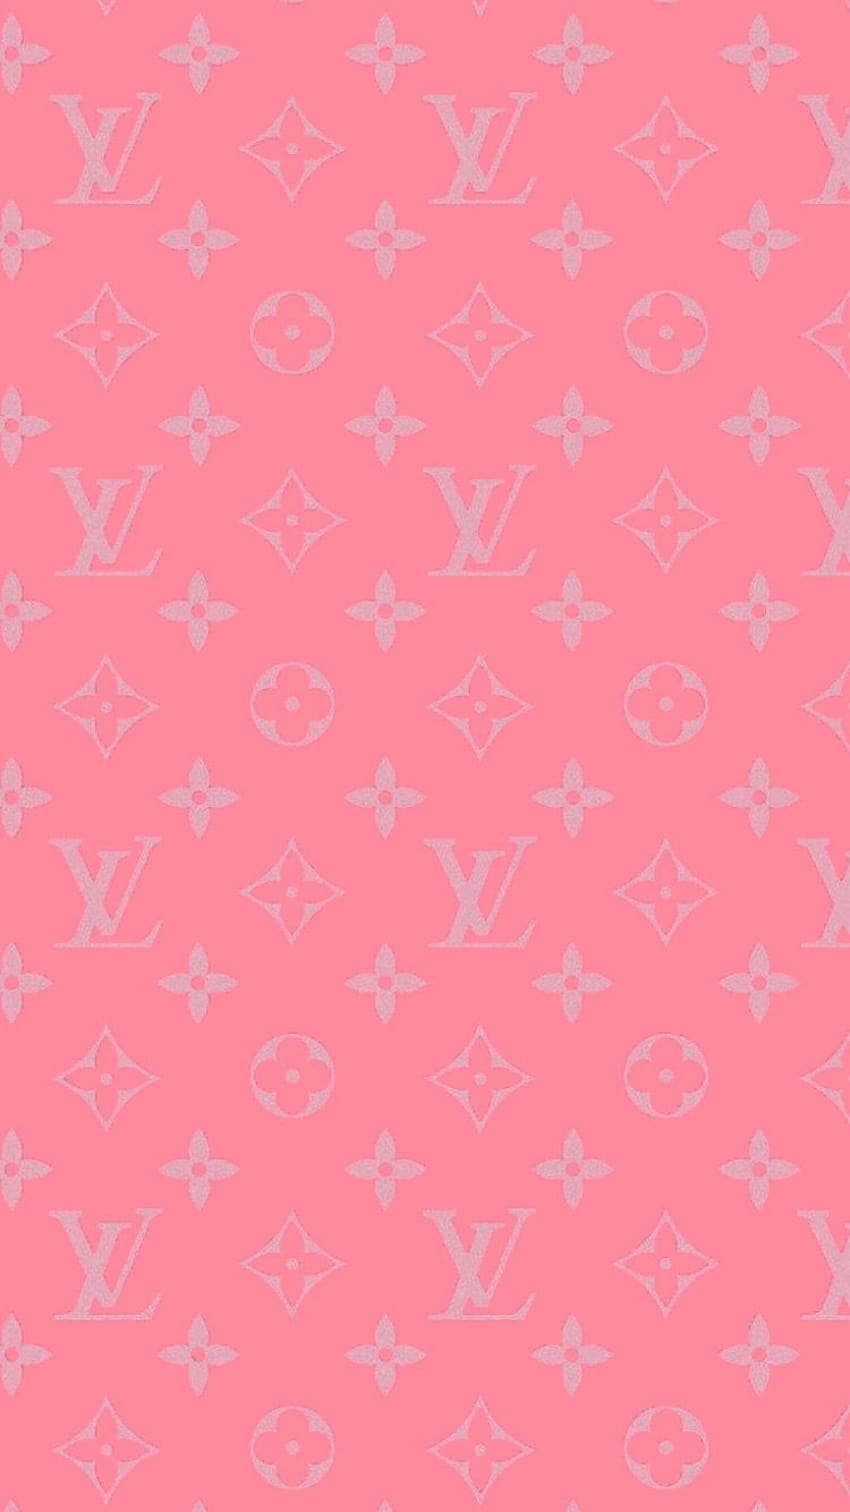 Louis Vuitton  Wallpaper iphone neon, Money wallpaper iphone, Iphone  wallpaper girly